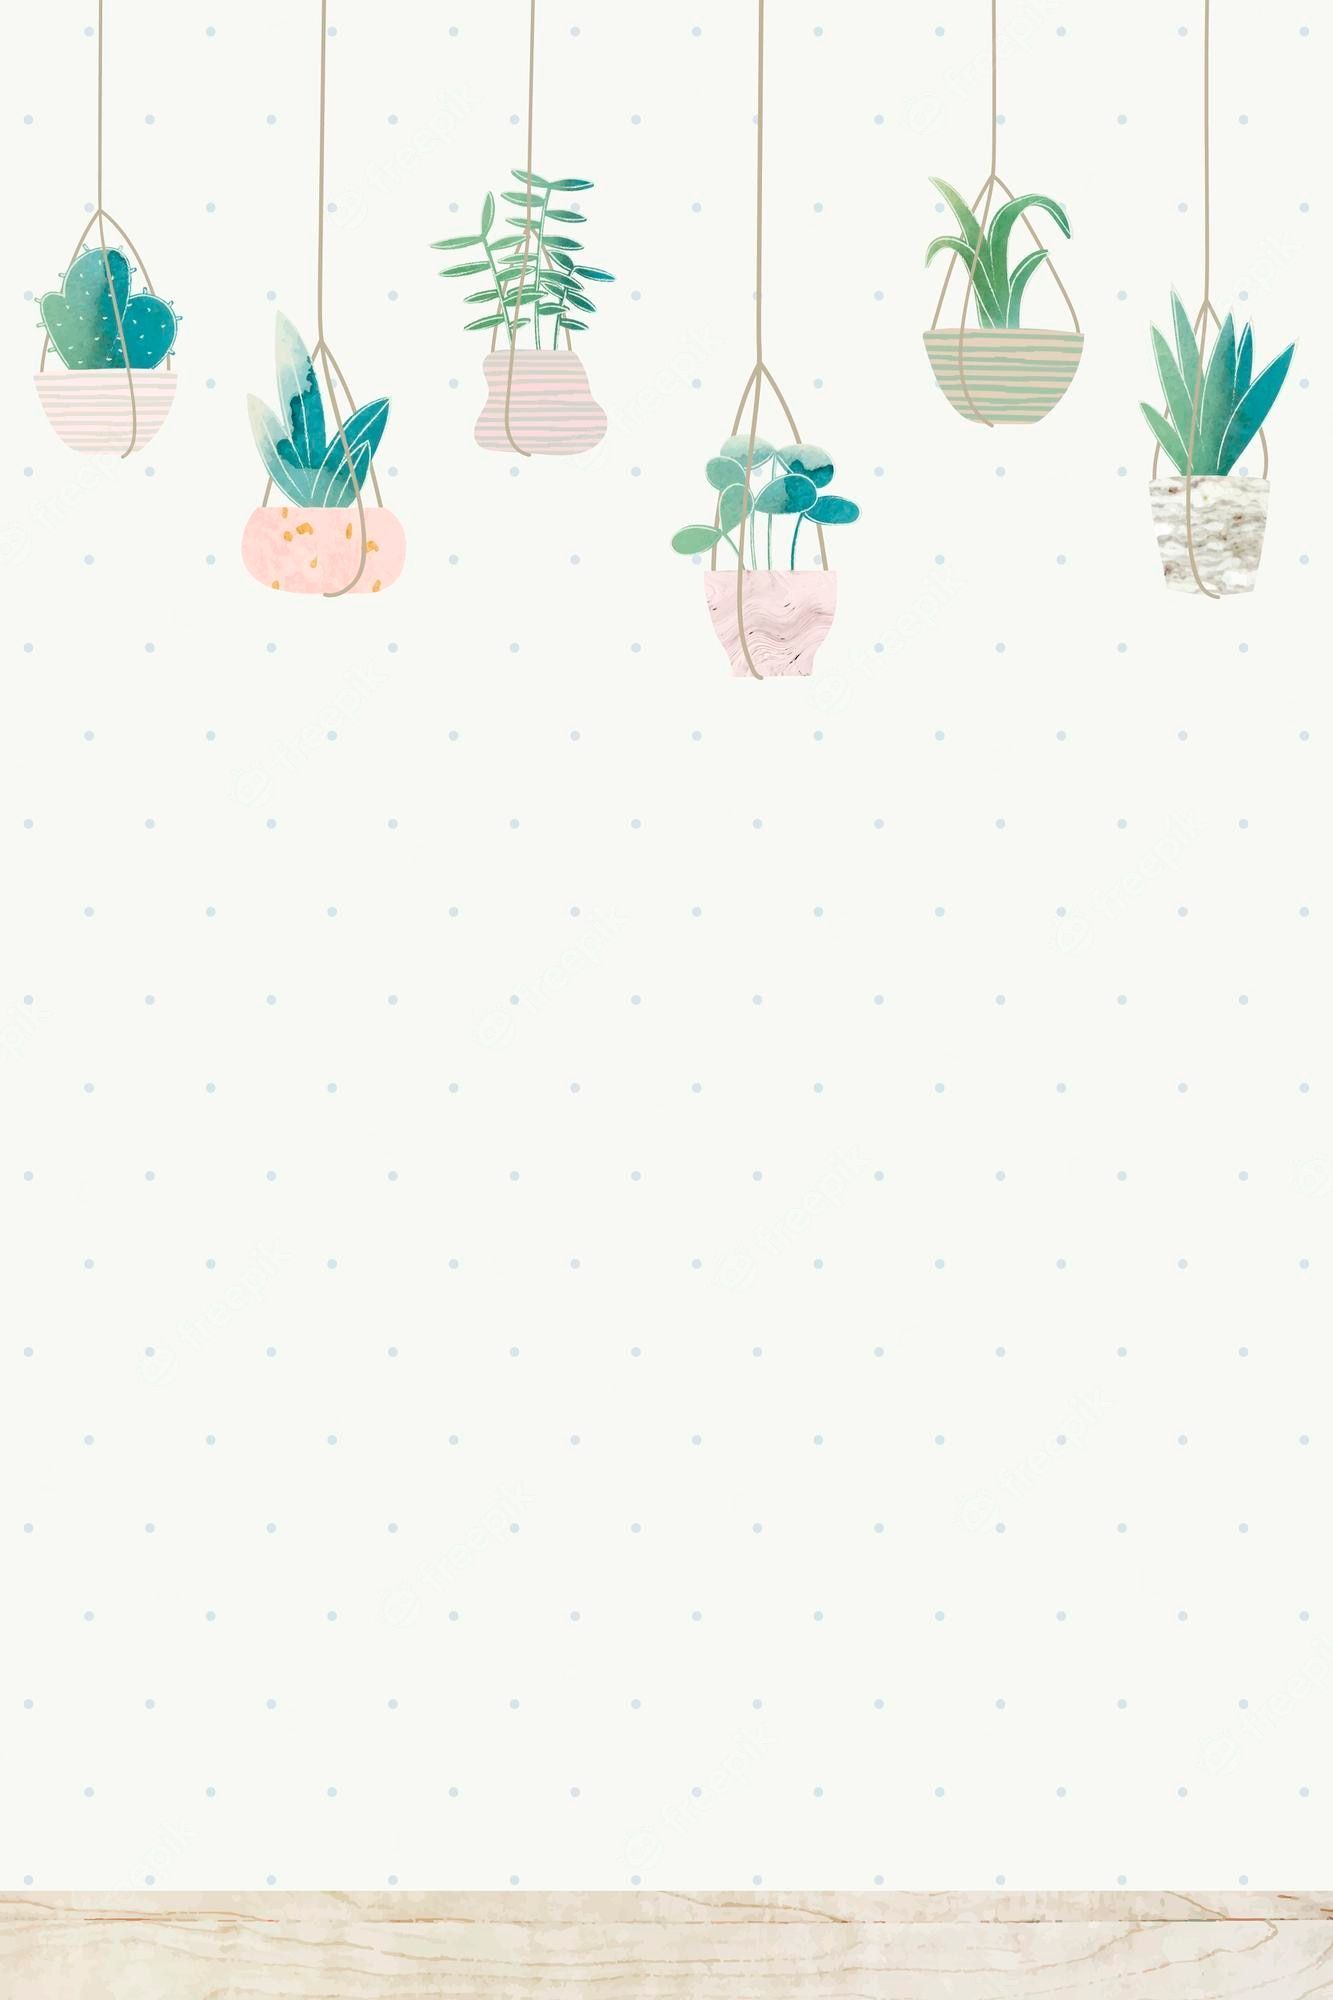 A graphic of hanging plants - Succulent, plants, pretty, cactus